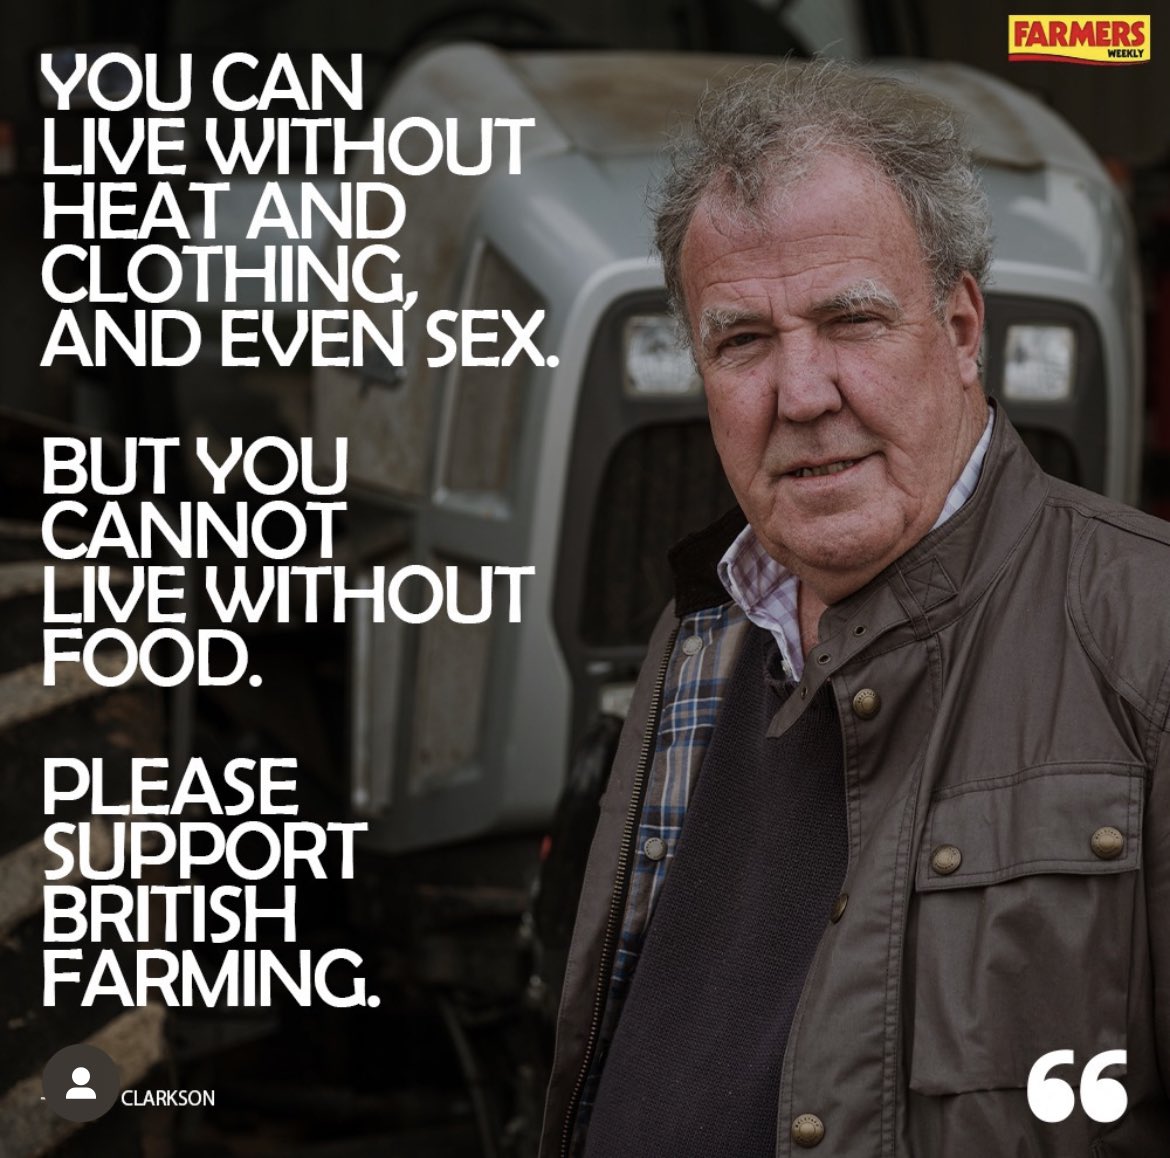 🇬🇧 @JeremyClarkson knows. 👏🏽 

#BackBritishFarmingDay